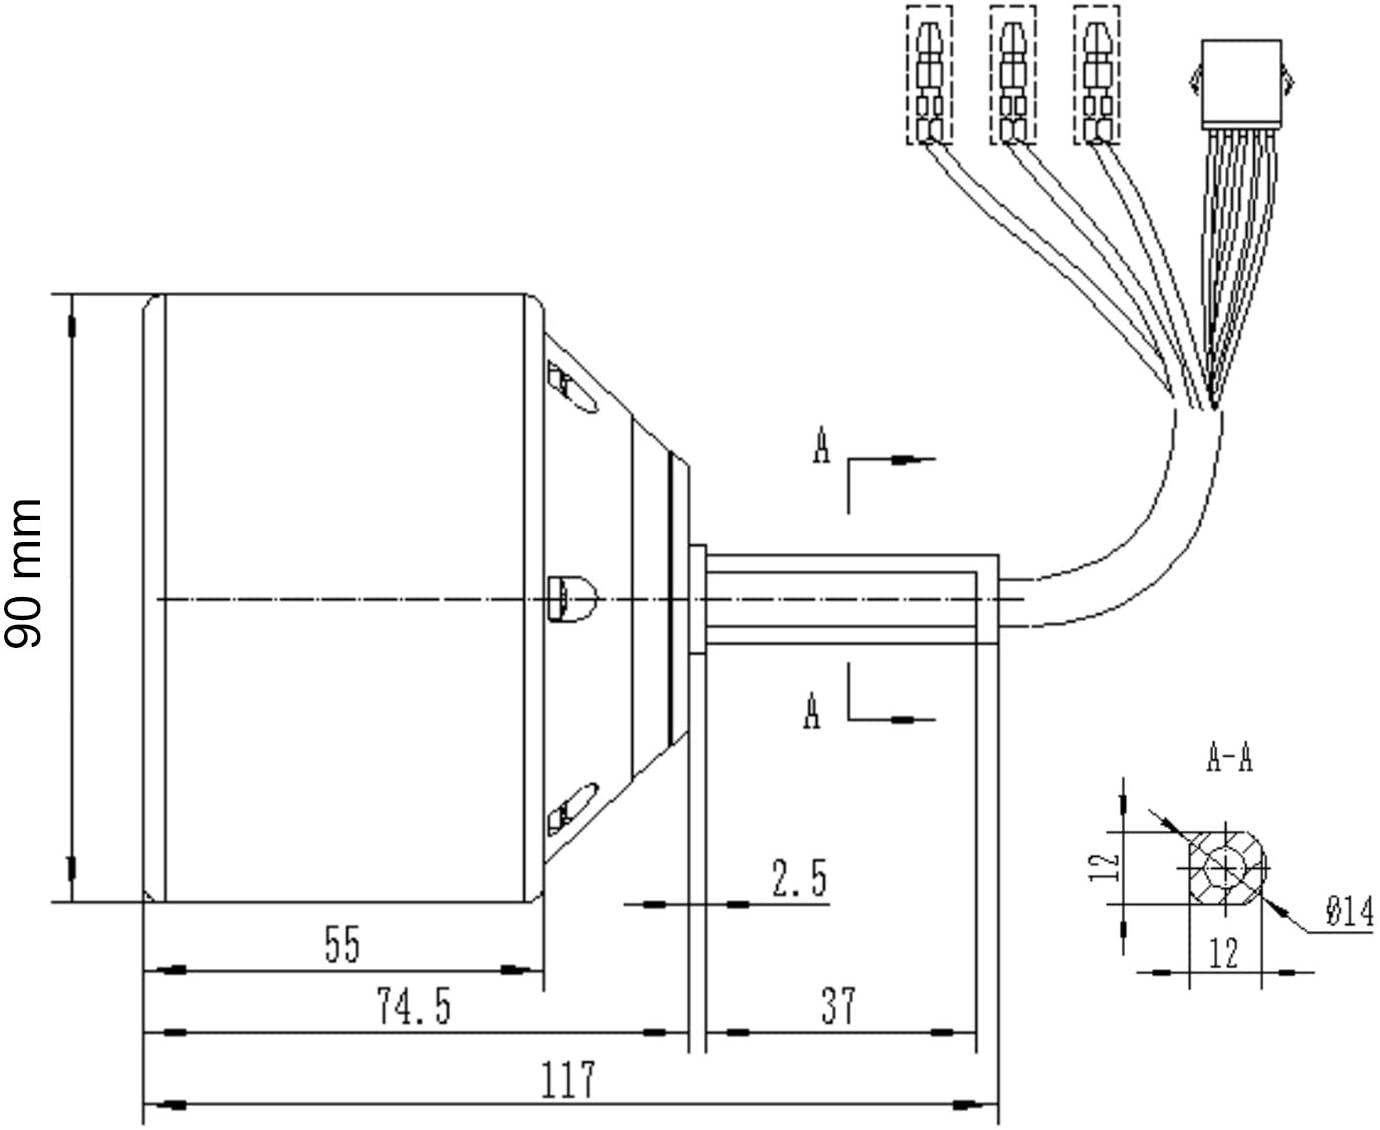 Puaida Dual Hub Motor Kit installation diagram